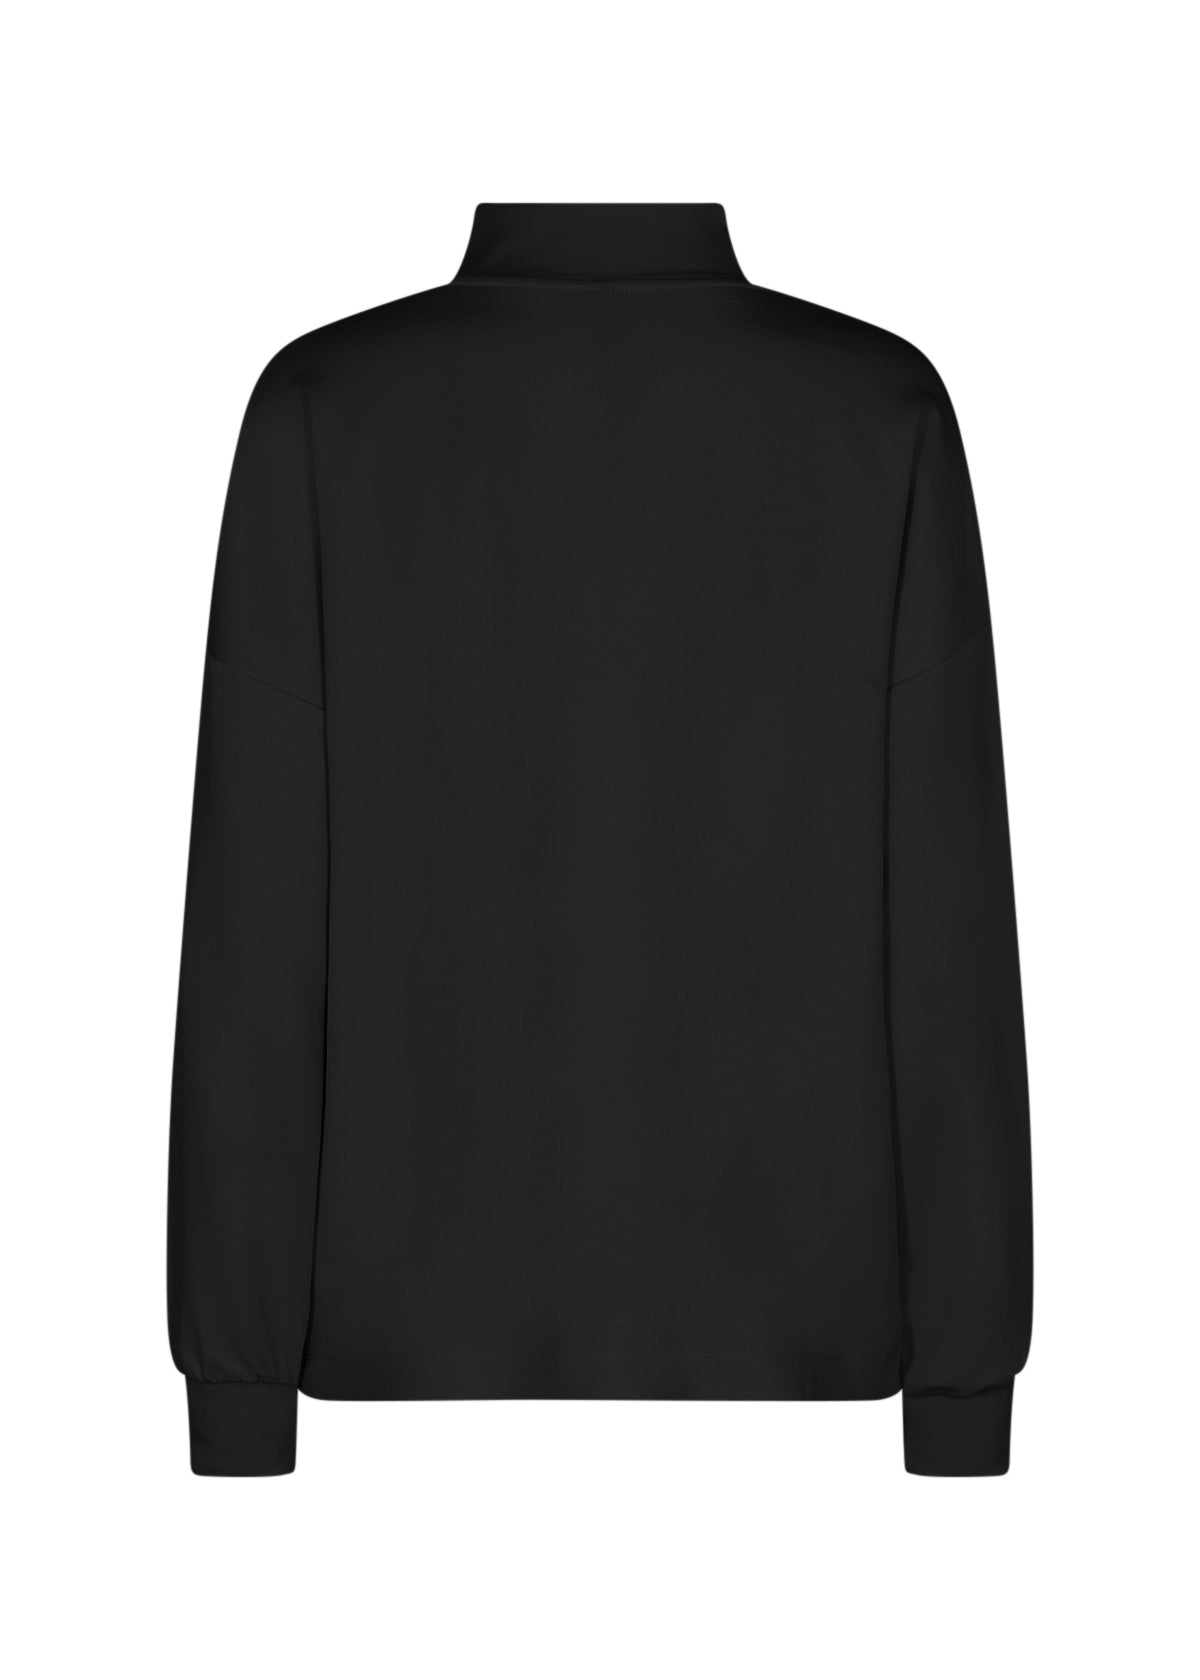 The Lousia Sweatshirt in Black